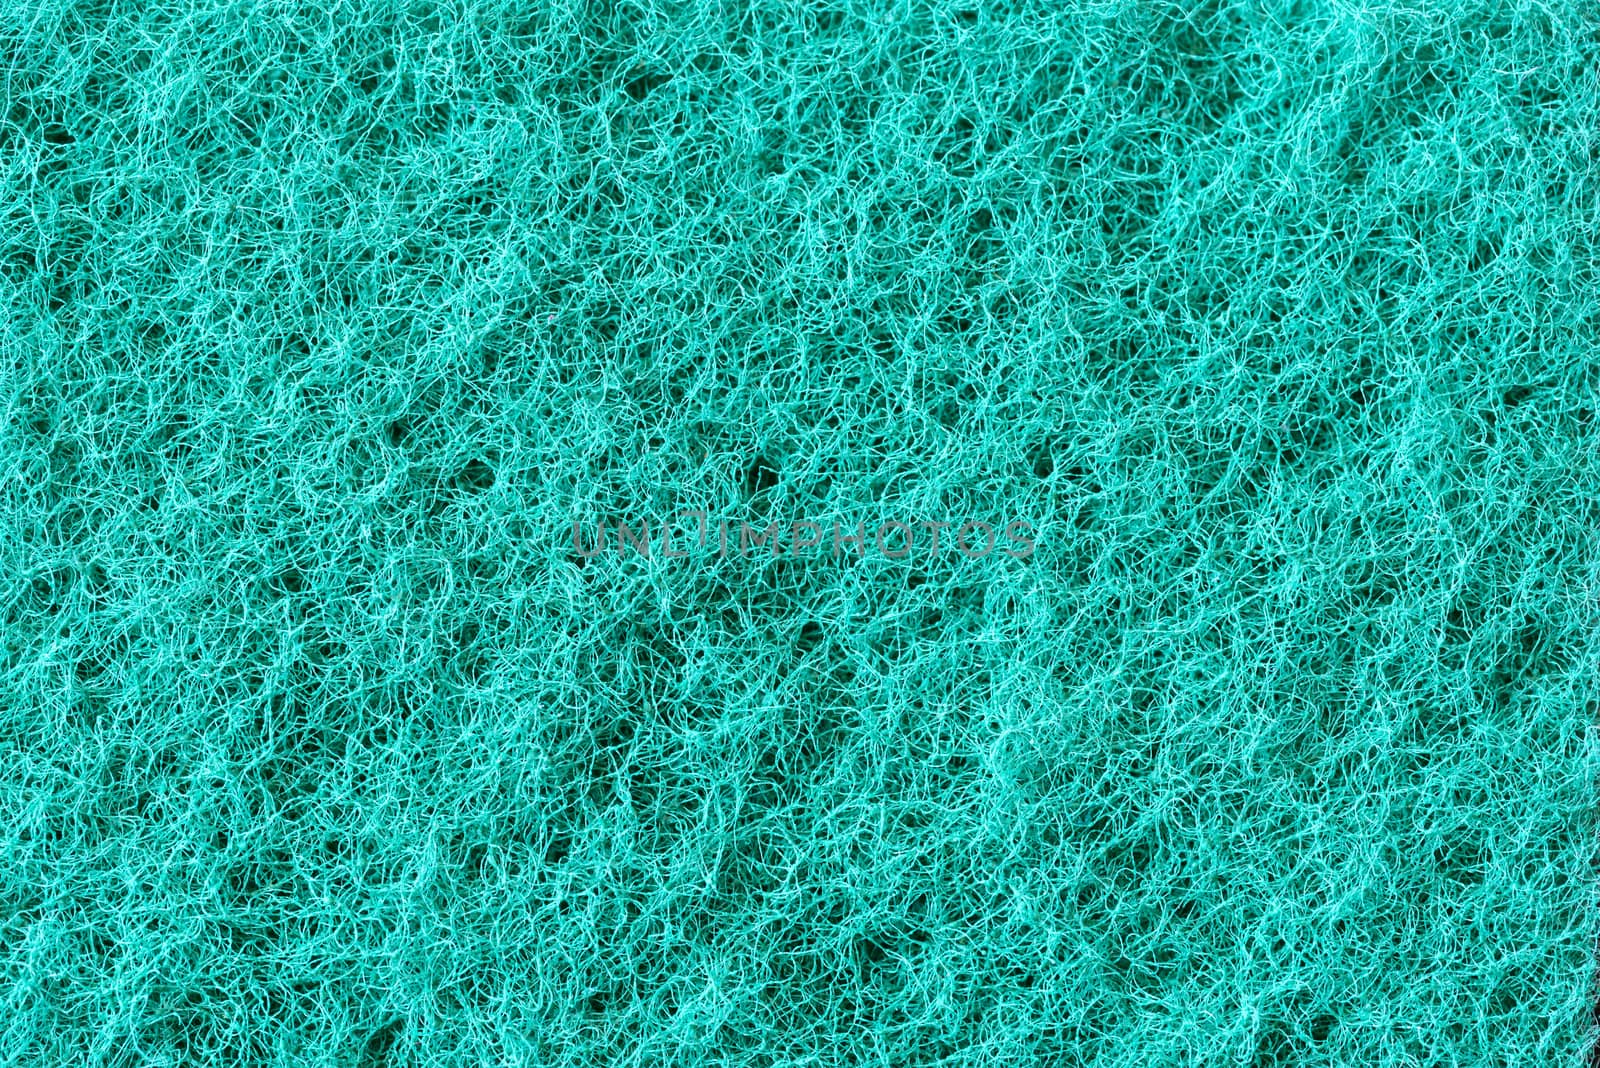 Synthetic Sponge Texture by MaxalTamor